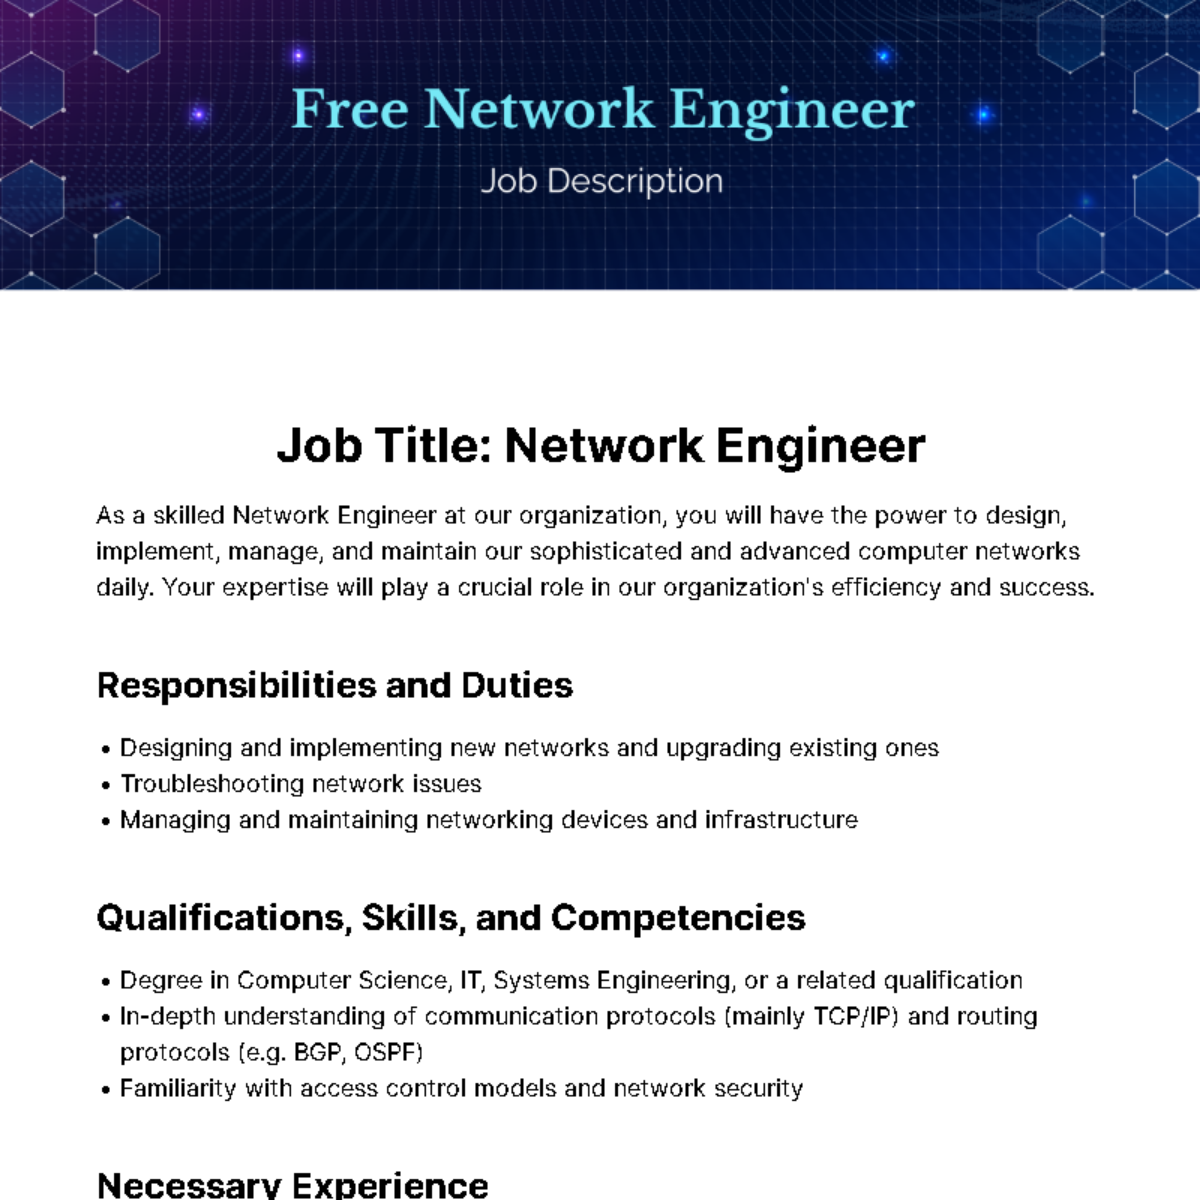 Free Network Engineer Job Description Template